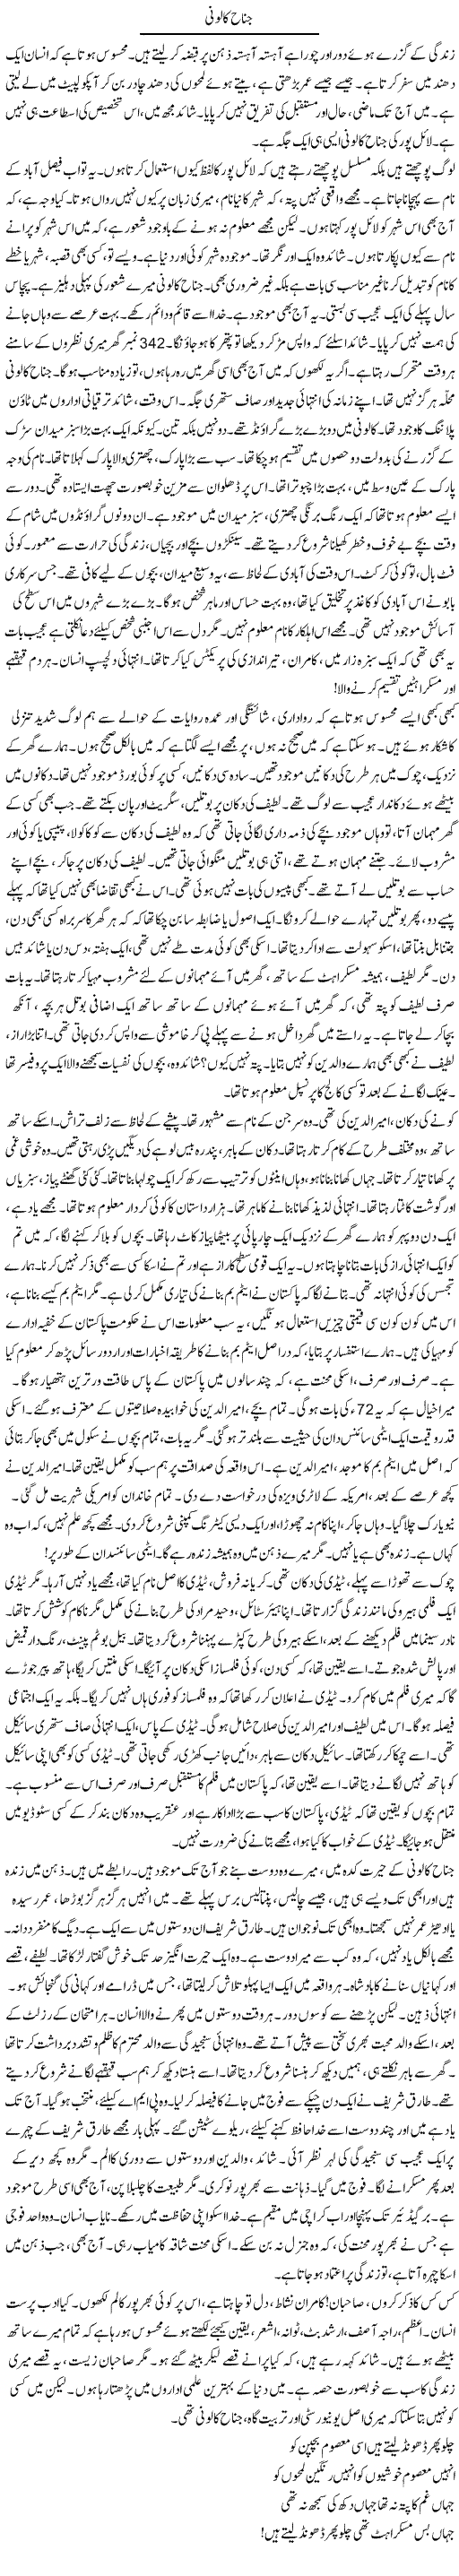 Jinnah Colony | Rao Manzar Hayat | Daily Urdu Columns